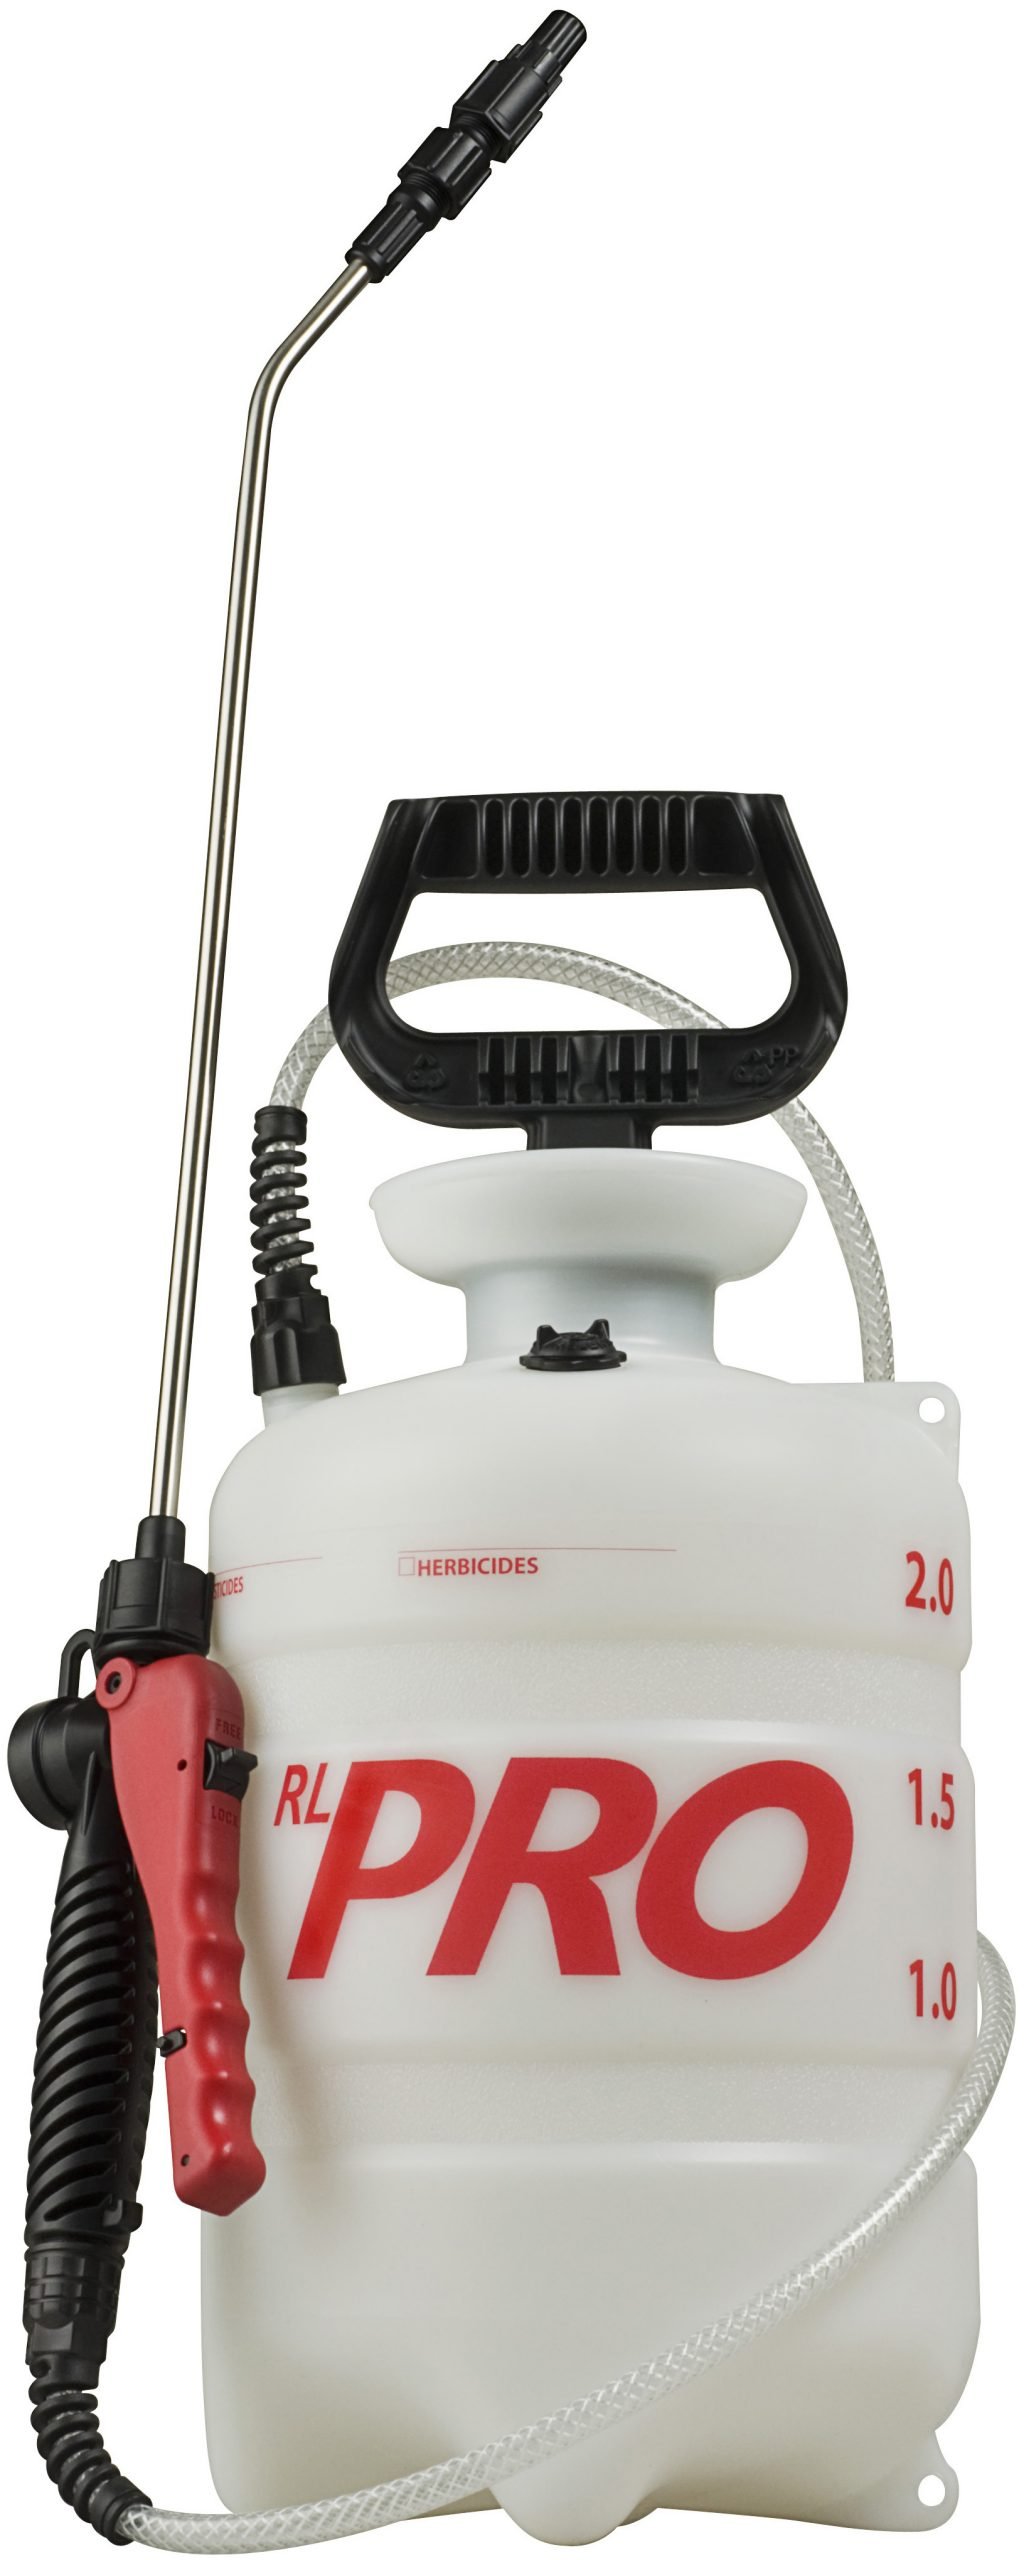 AGRLP996 - Compression Air Sprayer